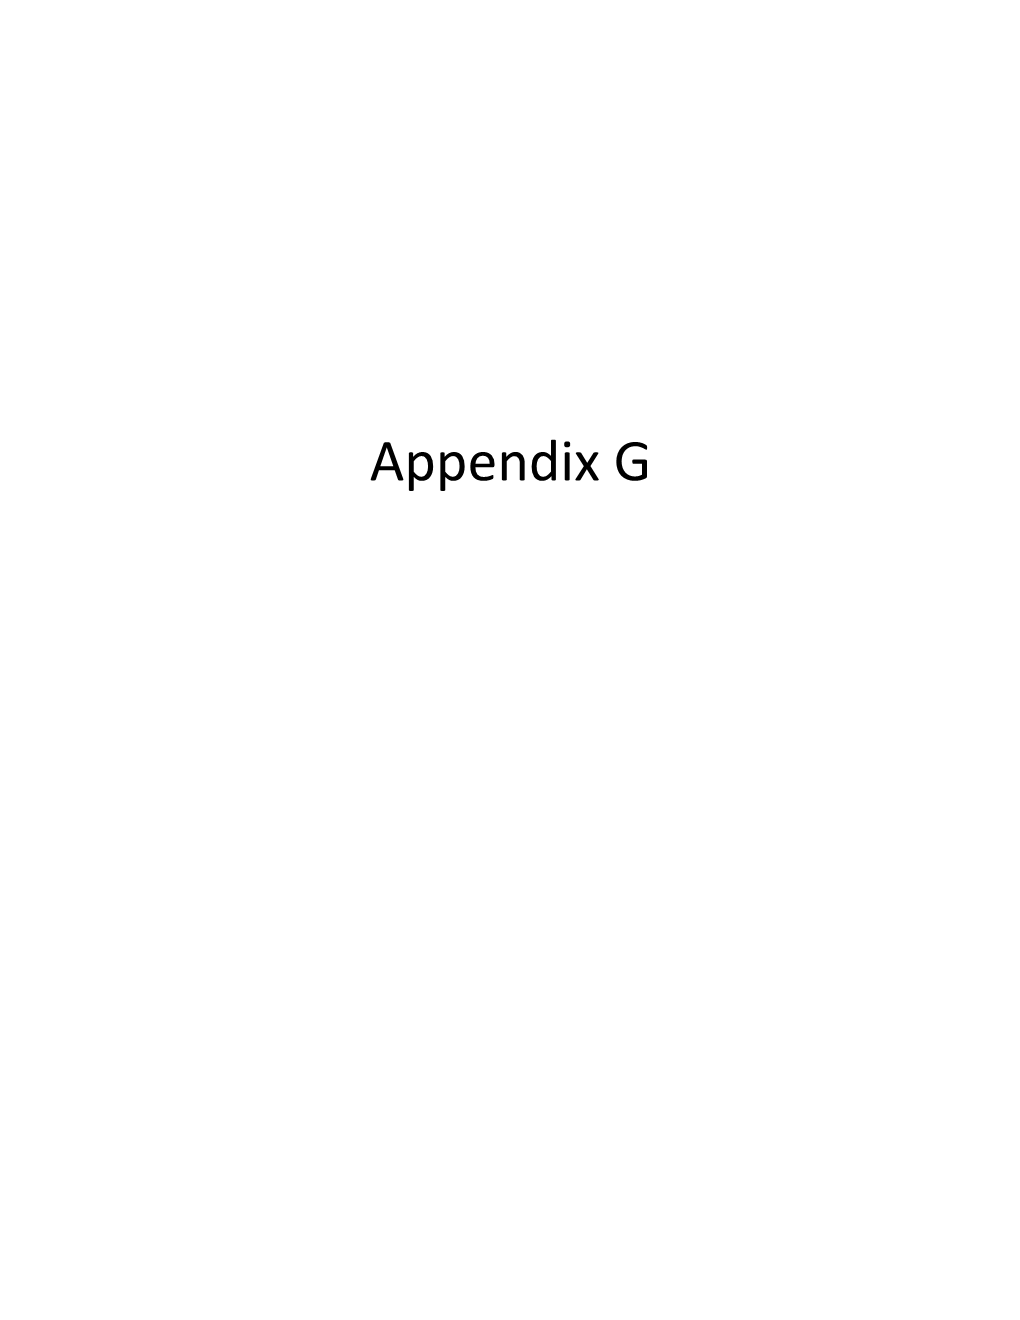 Appendix -- Metro 2013 Draft Title VI Program Update